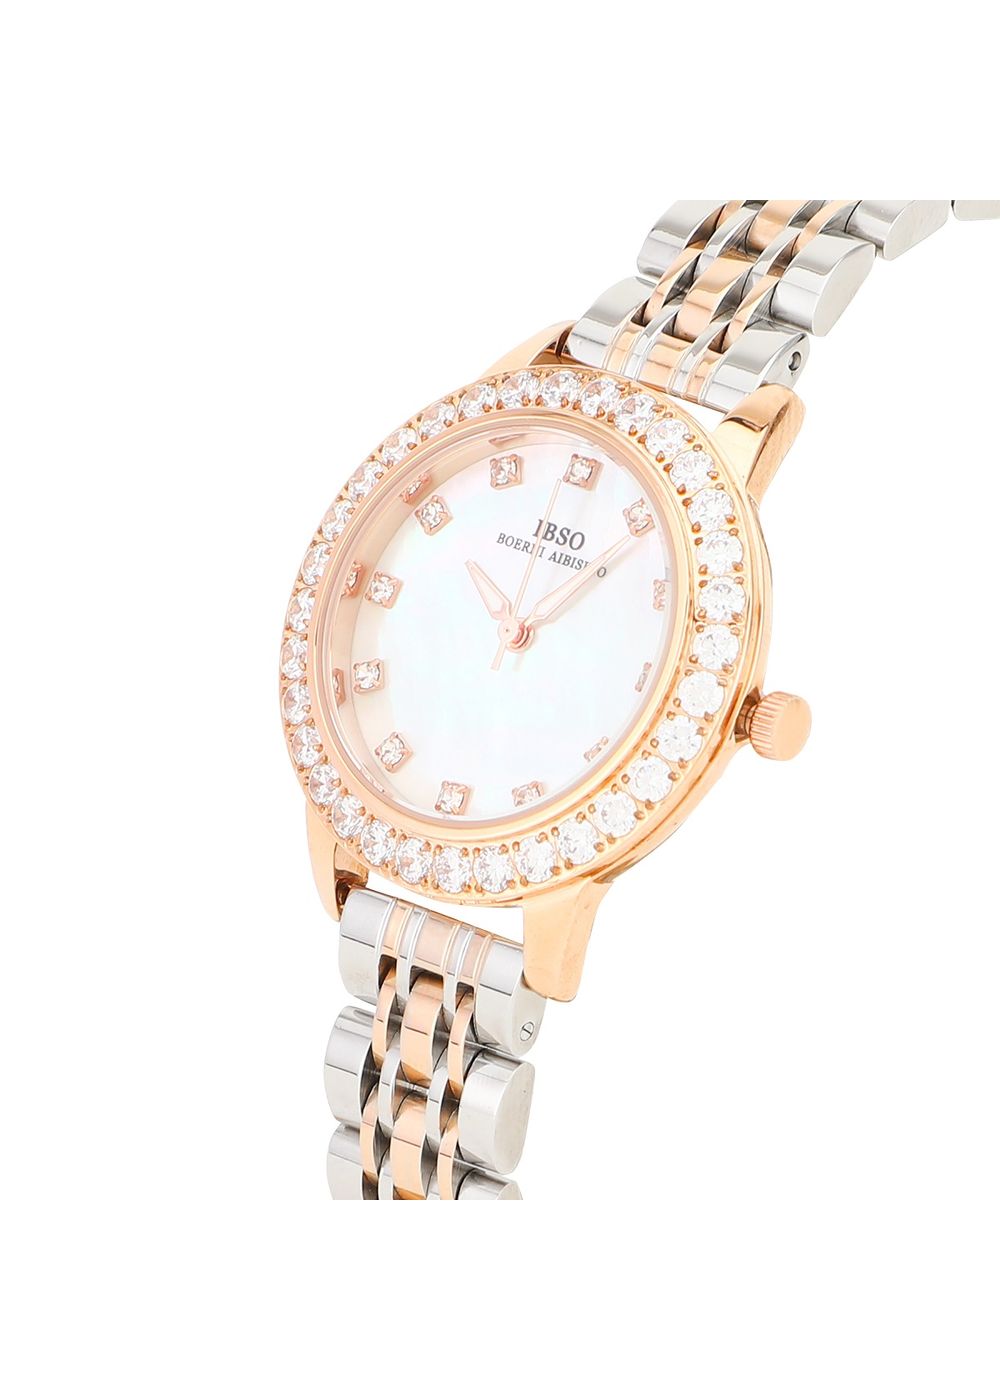 Digital Girl Wrist Watch  Wrist Watch Fashion Pink  Watch Women Pink  Digits  Brand  Aliexpress